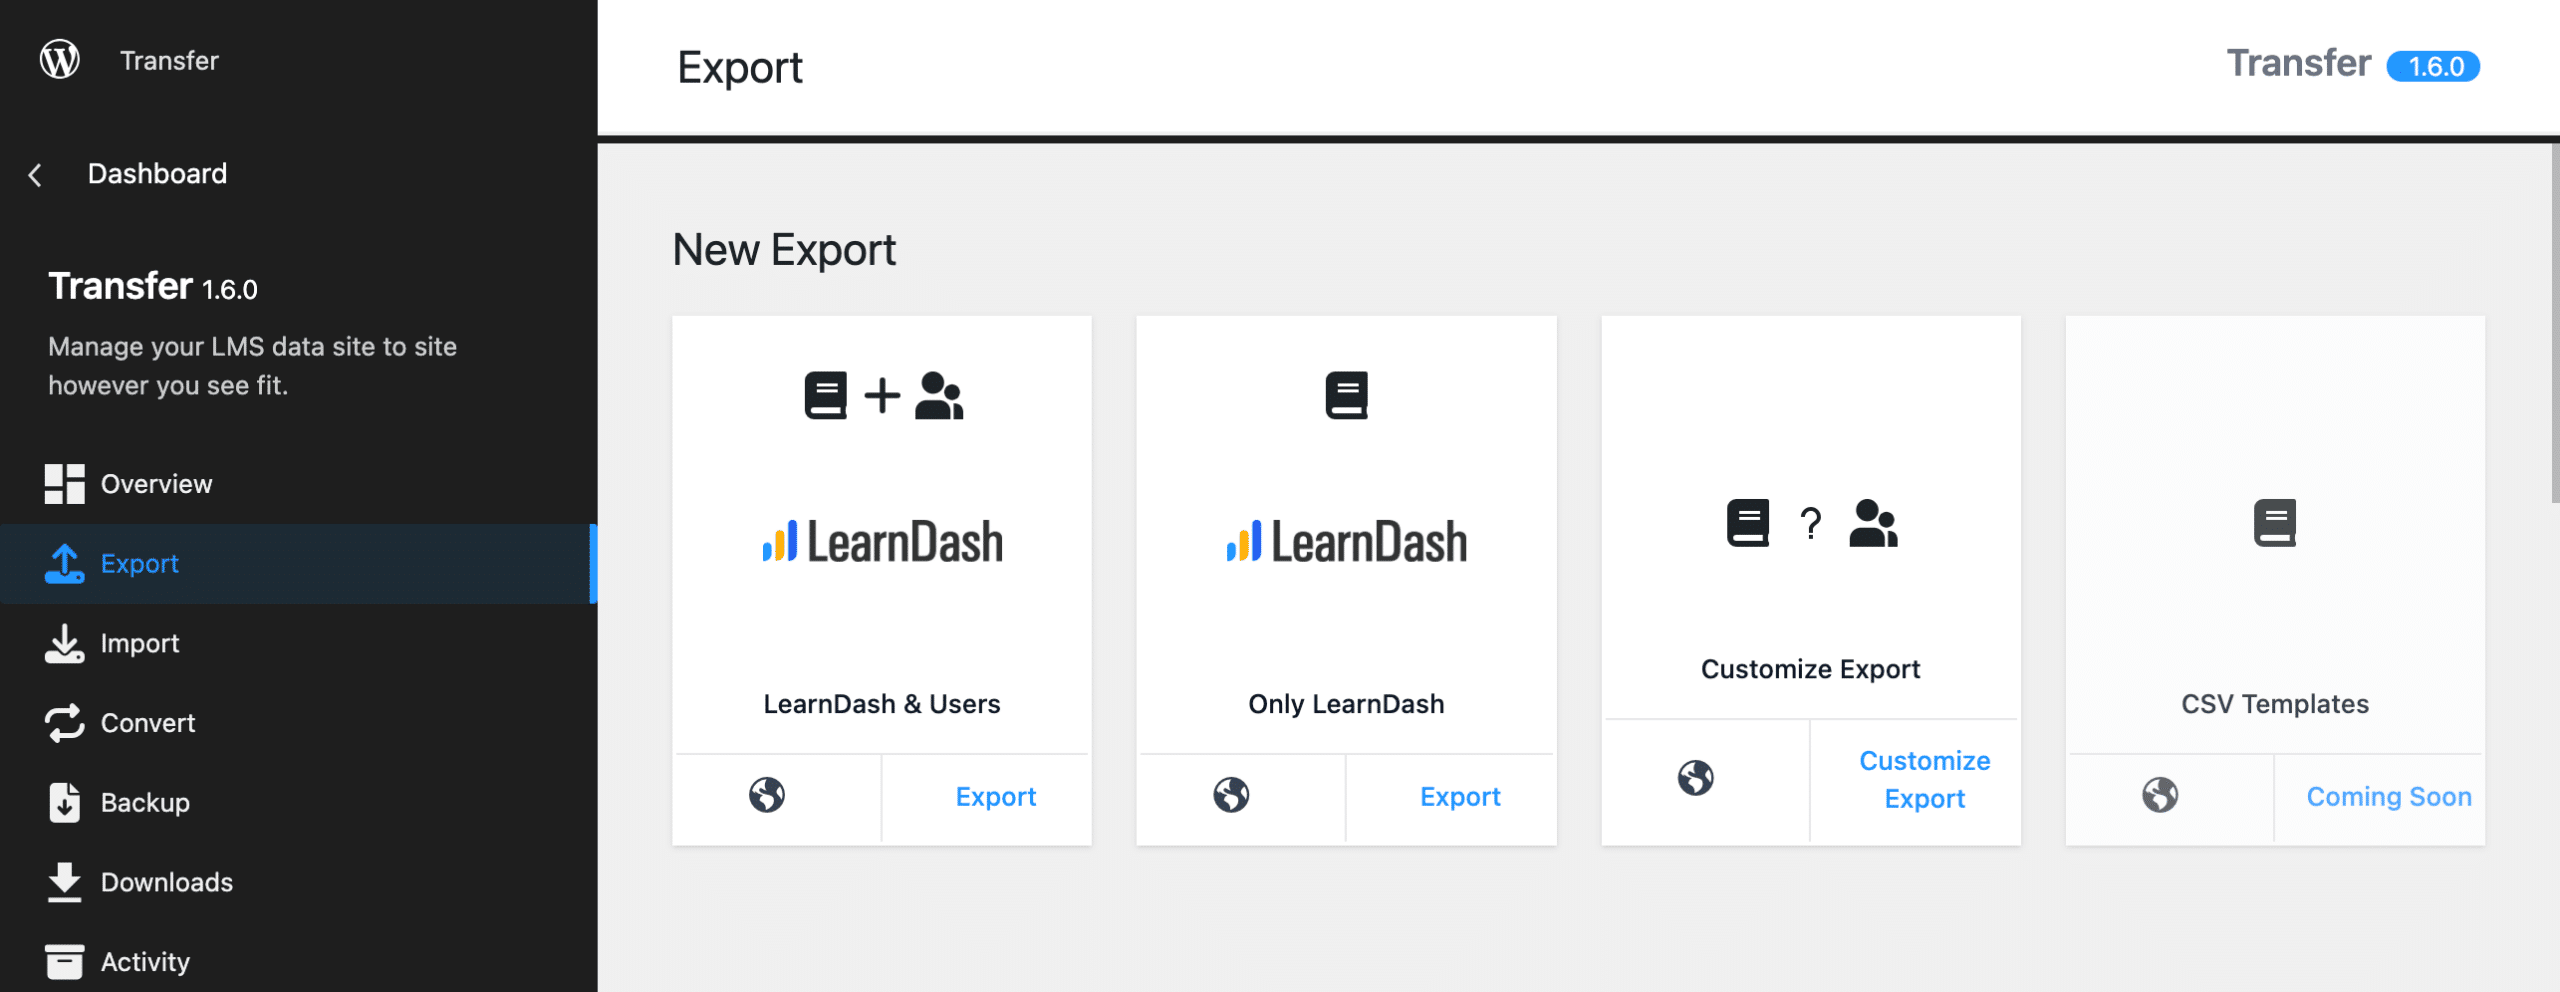 Transfer LearnDash export menu.